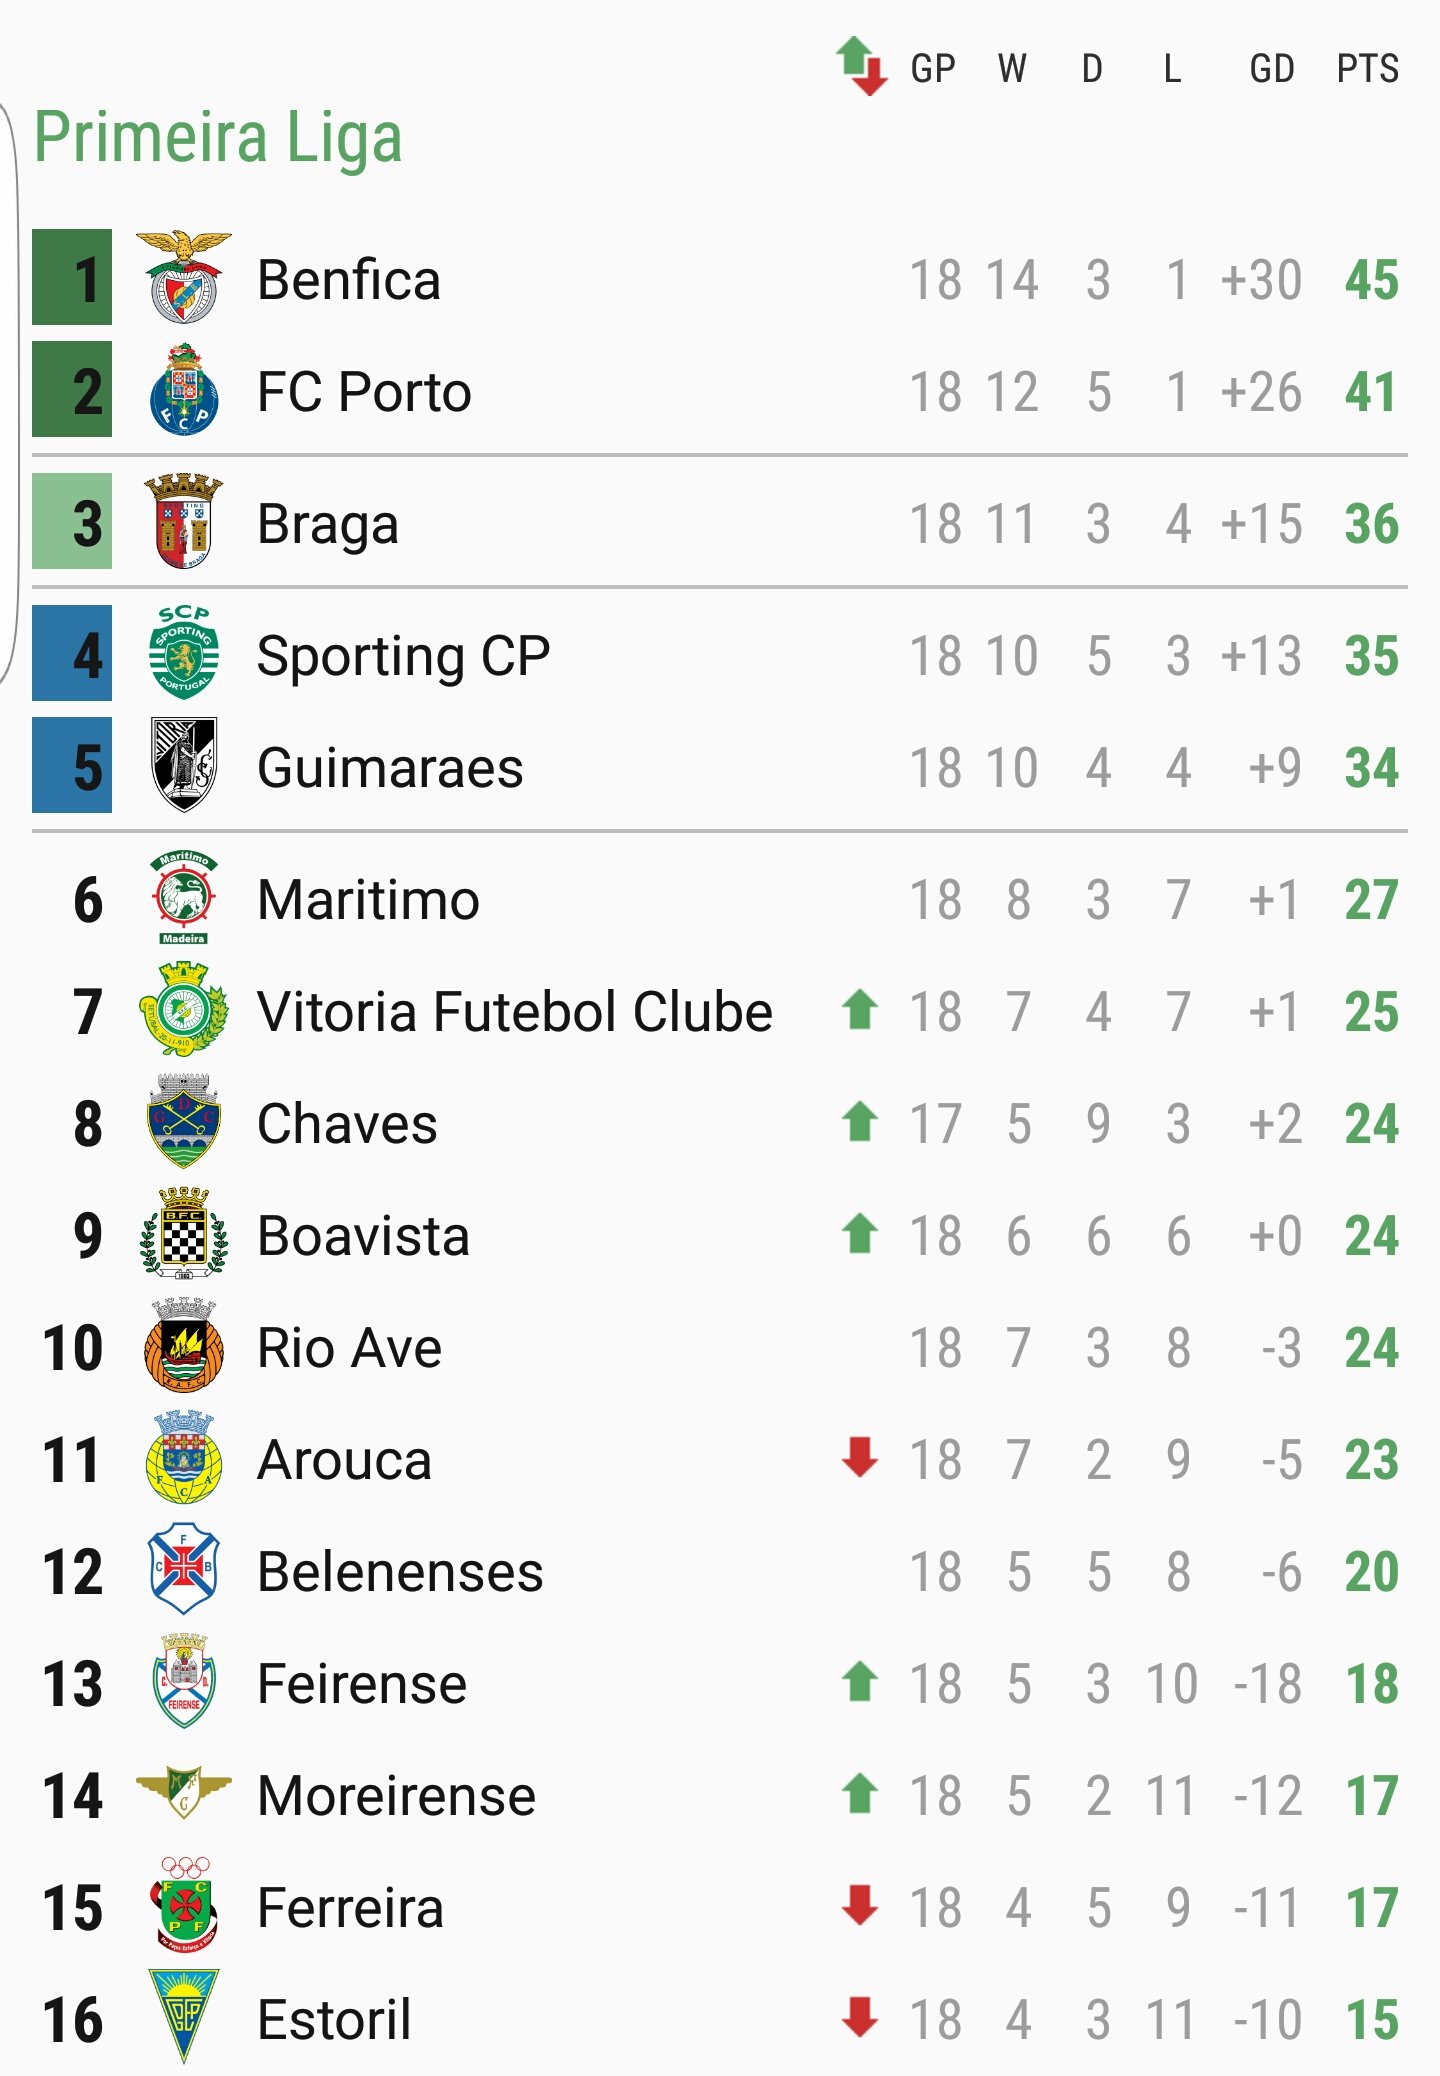 Primeira Liga Standings & Table